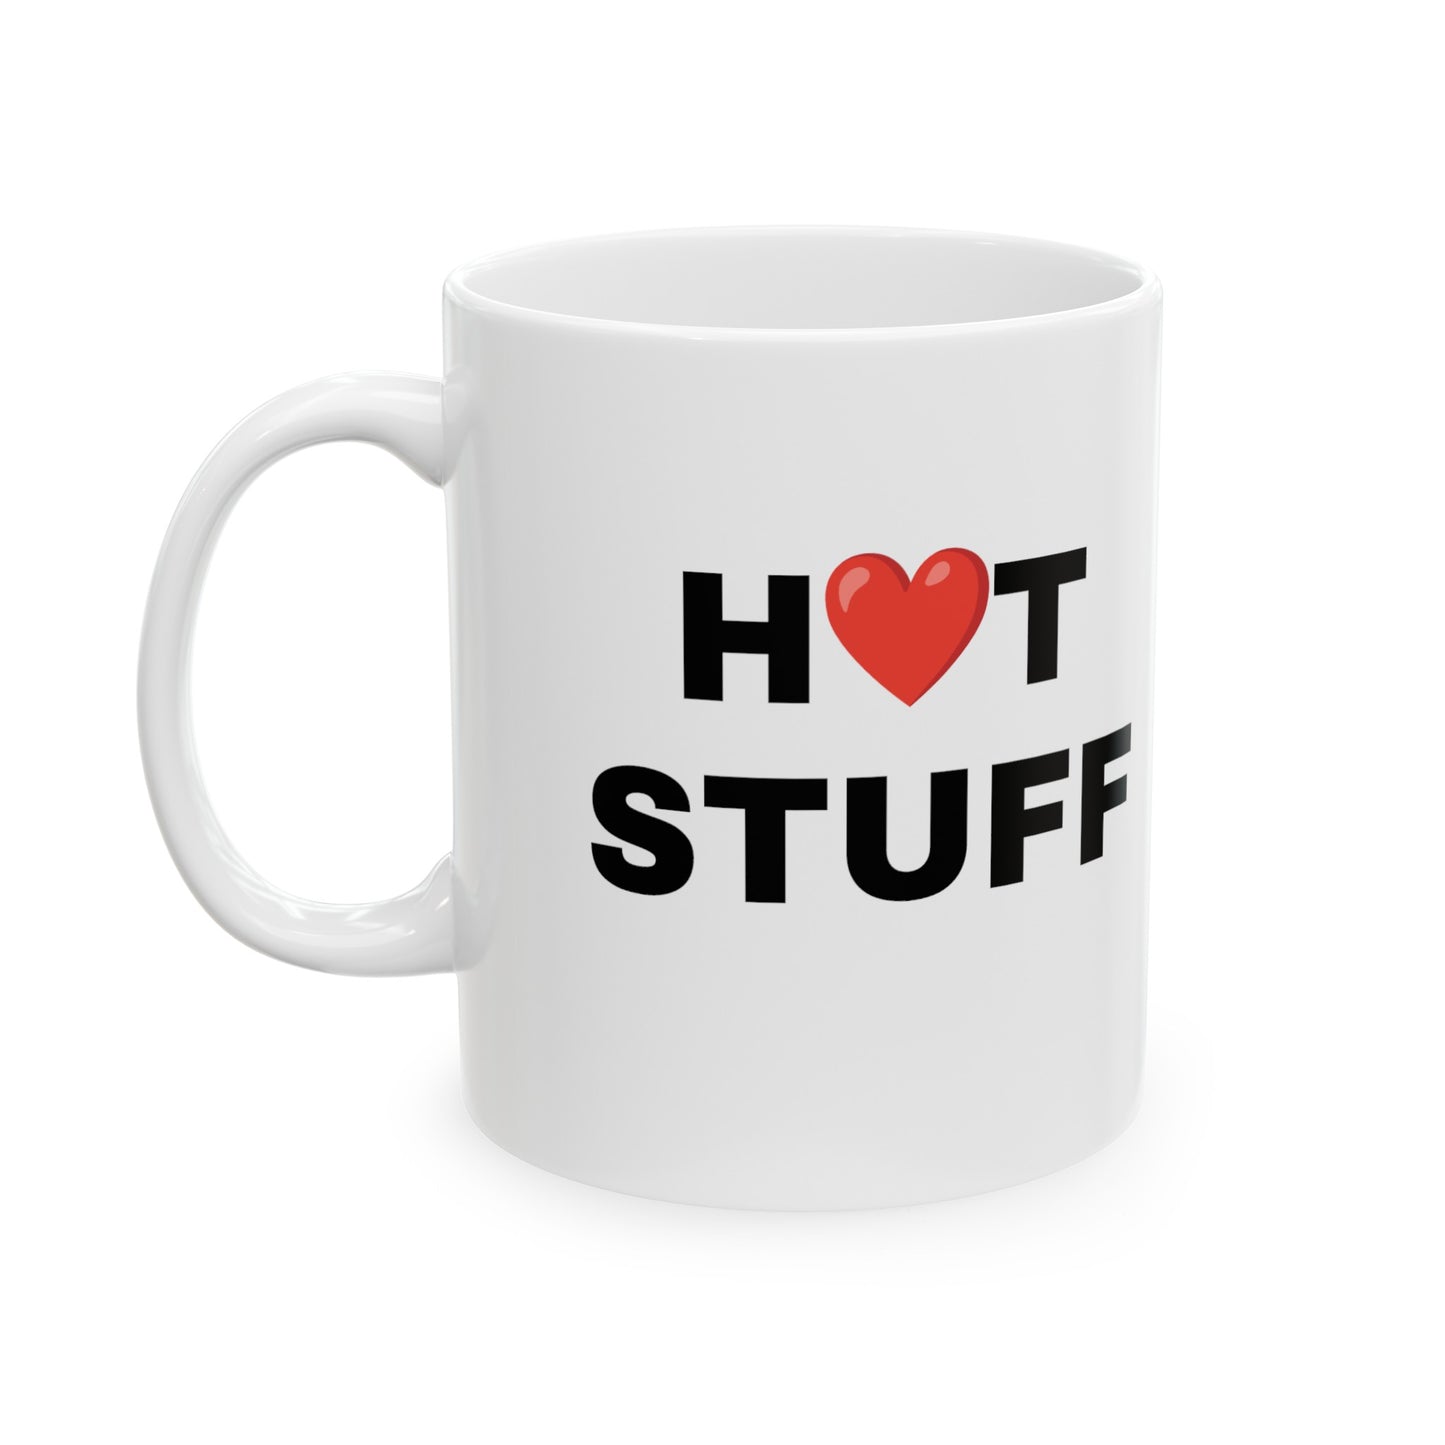 HOT STUFF - Ceramic Mug 11oz